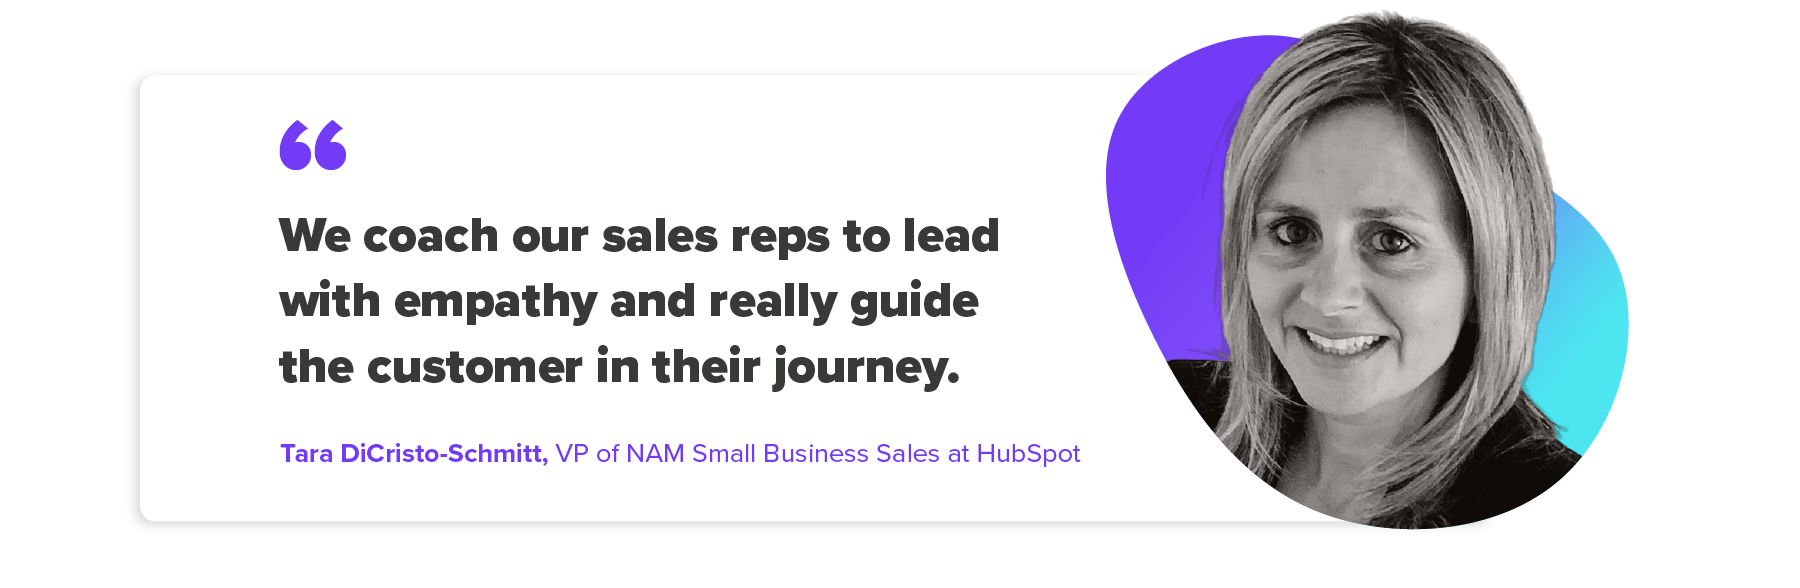 small business sales hubspot